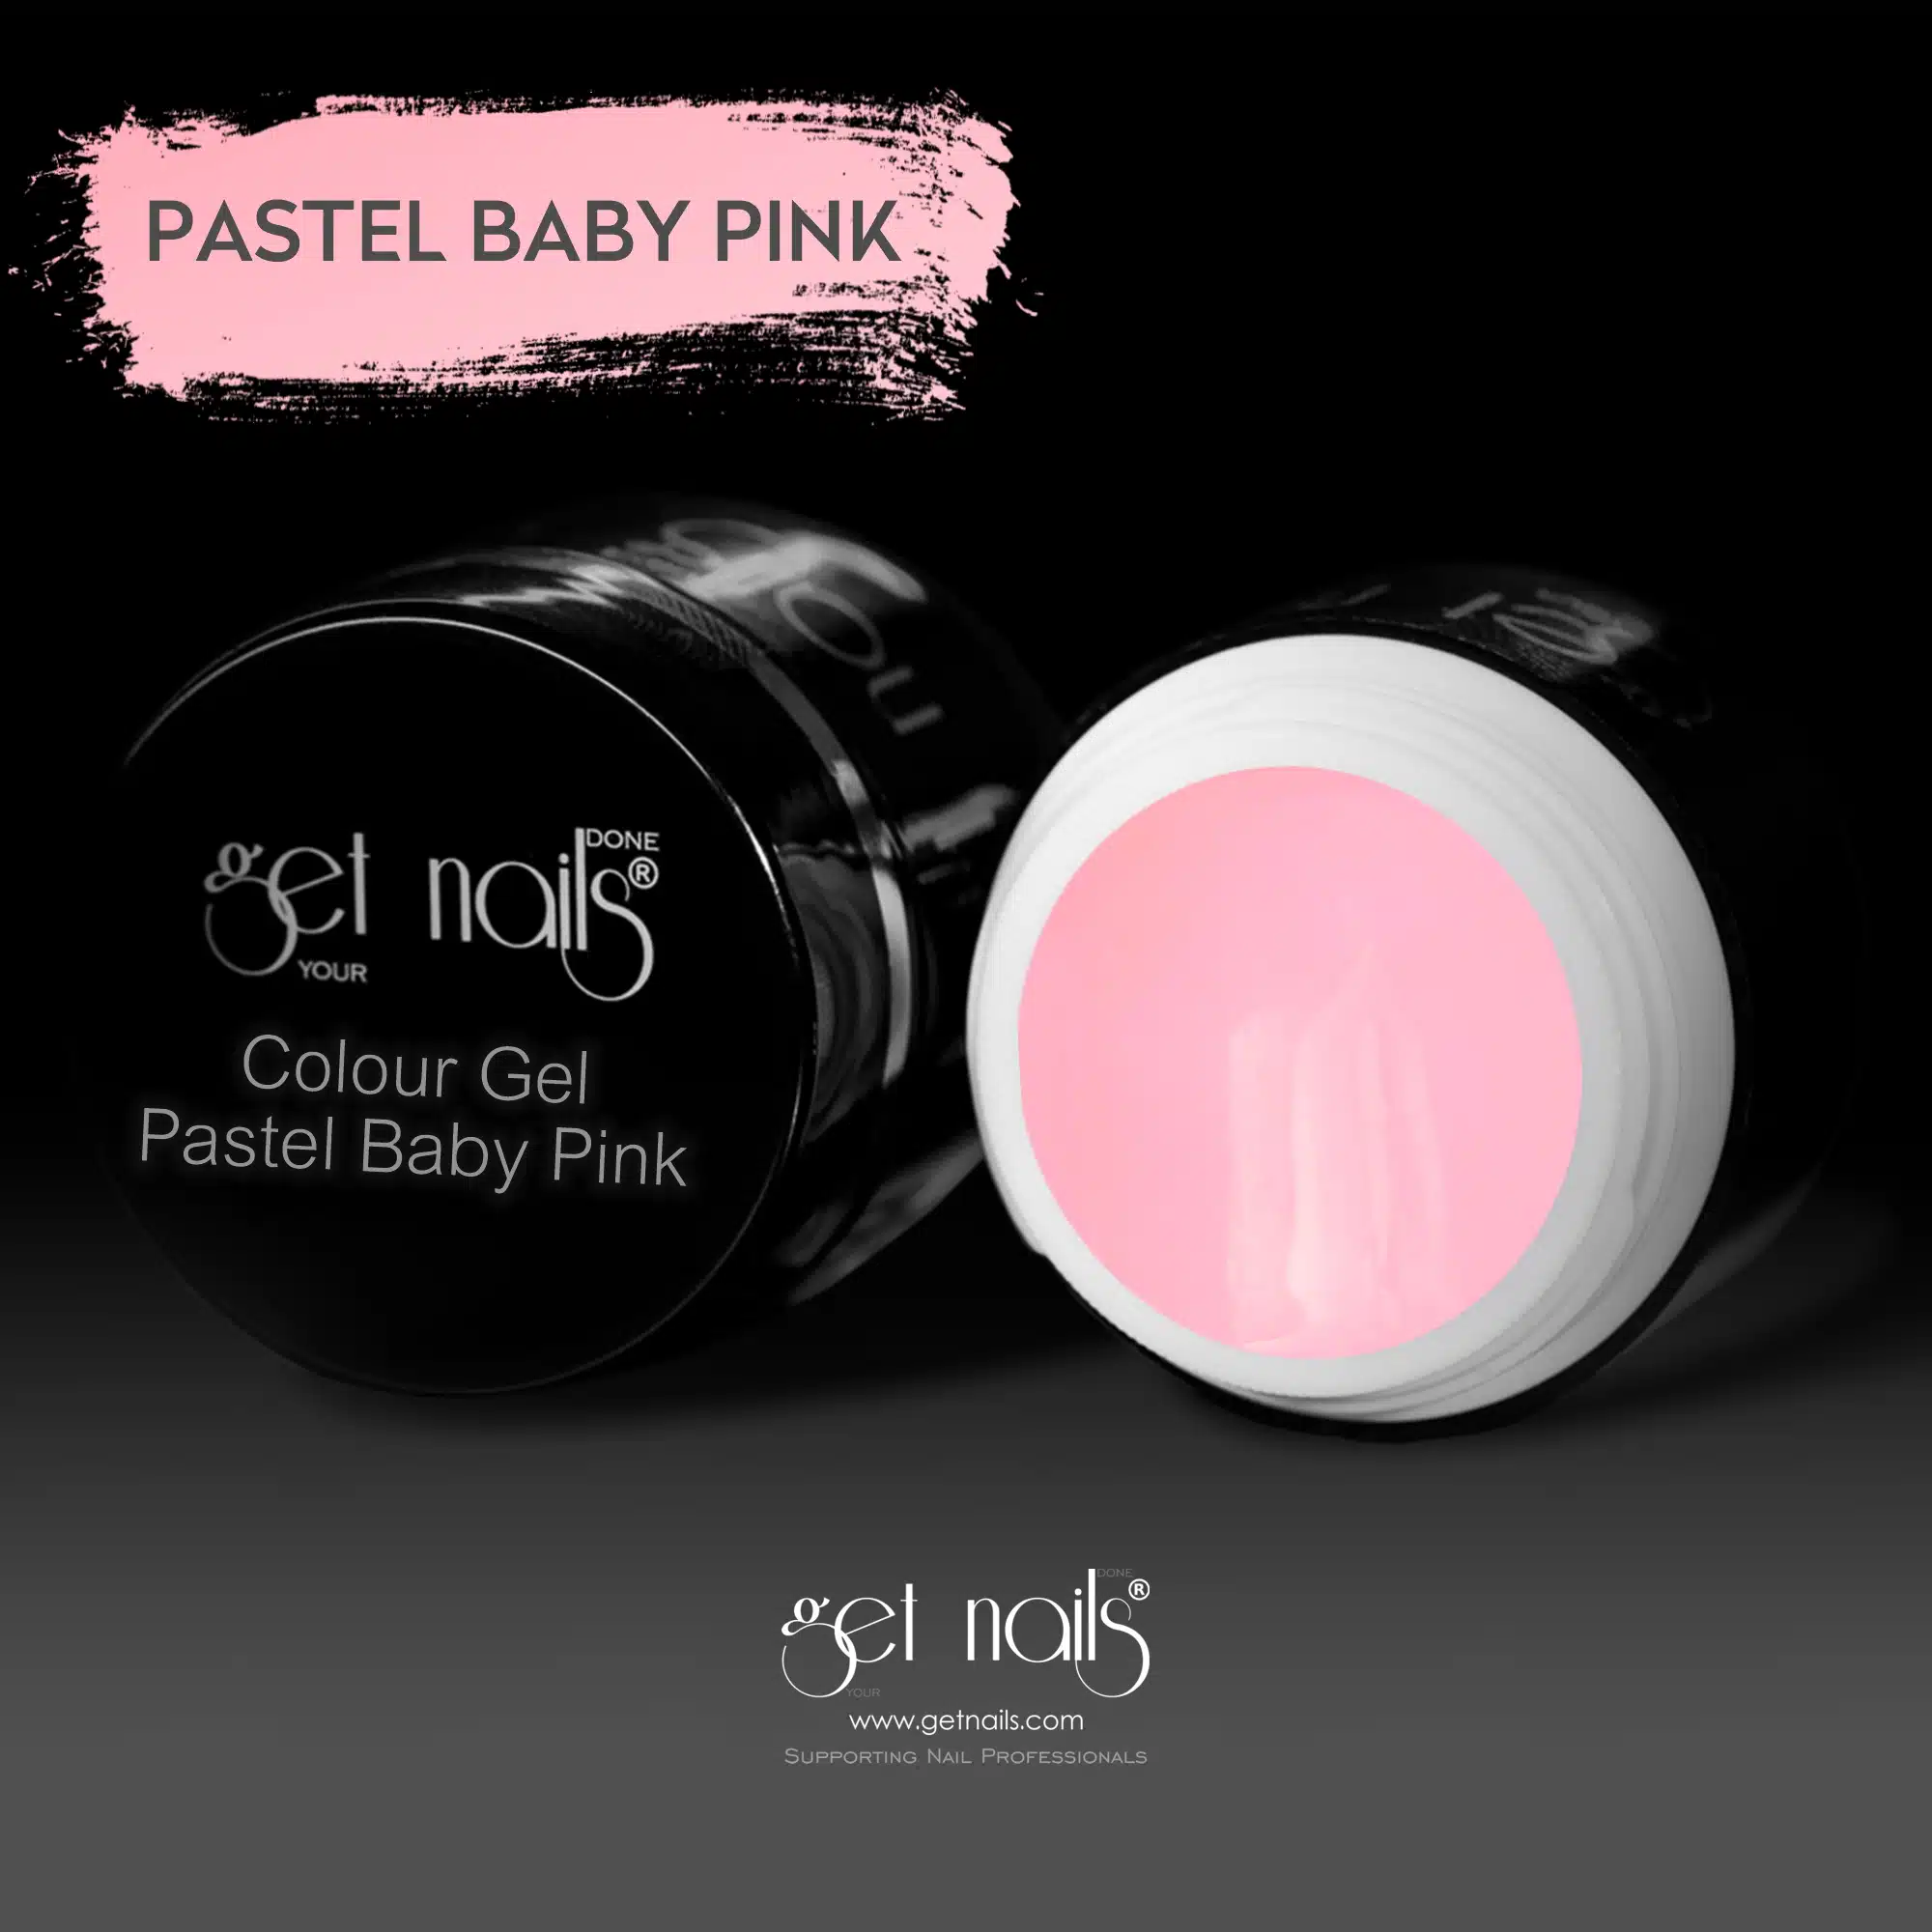 Get Nails Austria - Цветной гель Pastel Baby Pink 5g